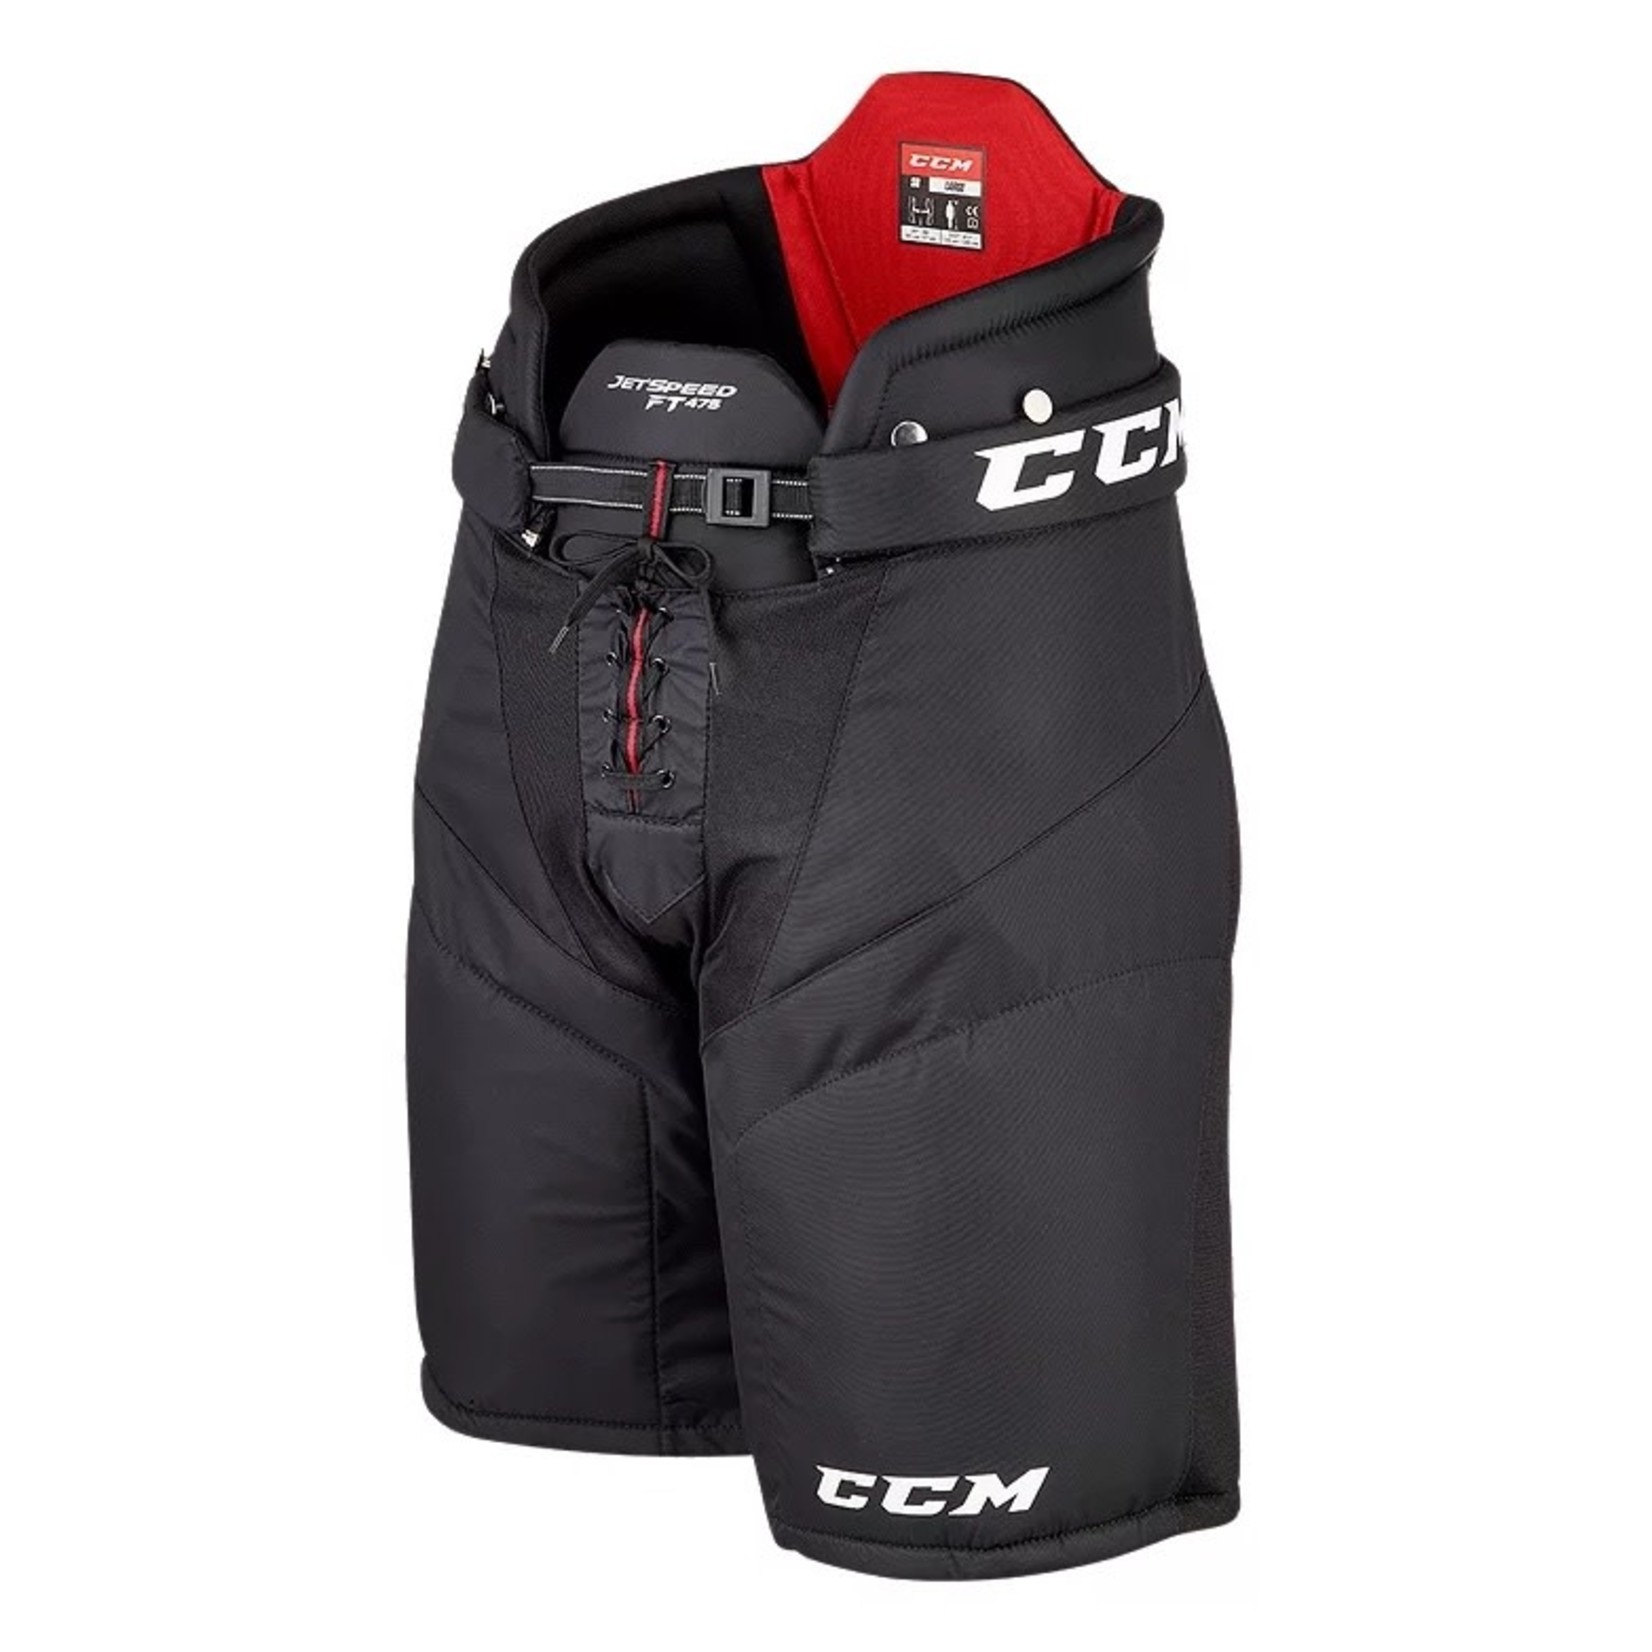 CCM CCM Hockey Pants, Jetspeed FT475, Junior